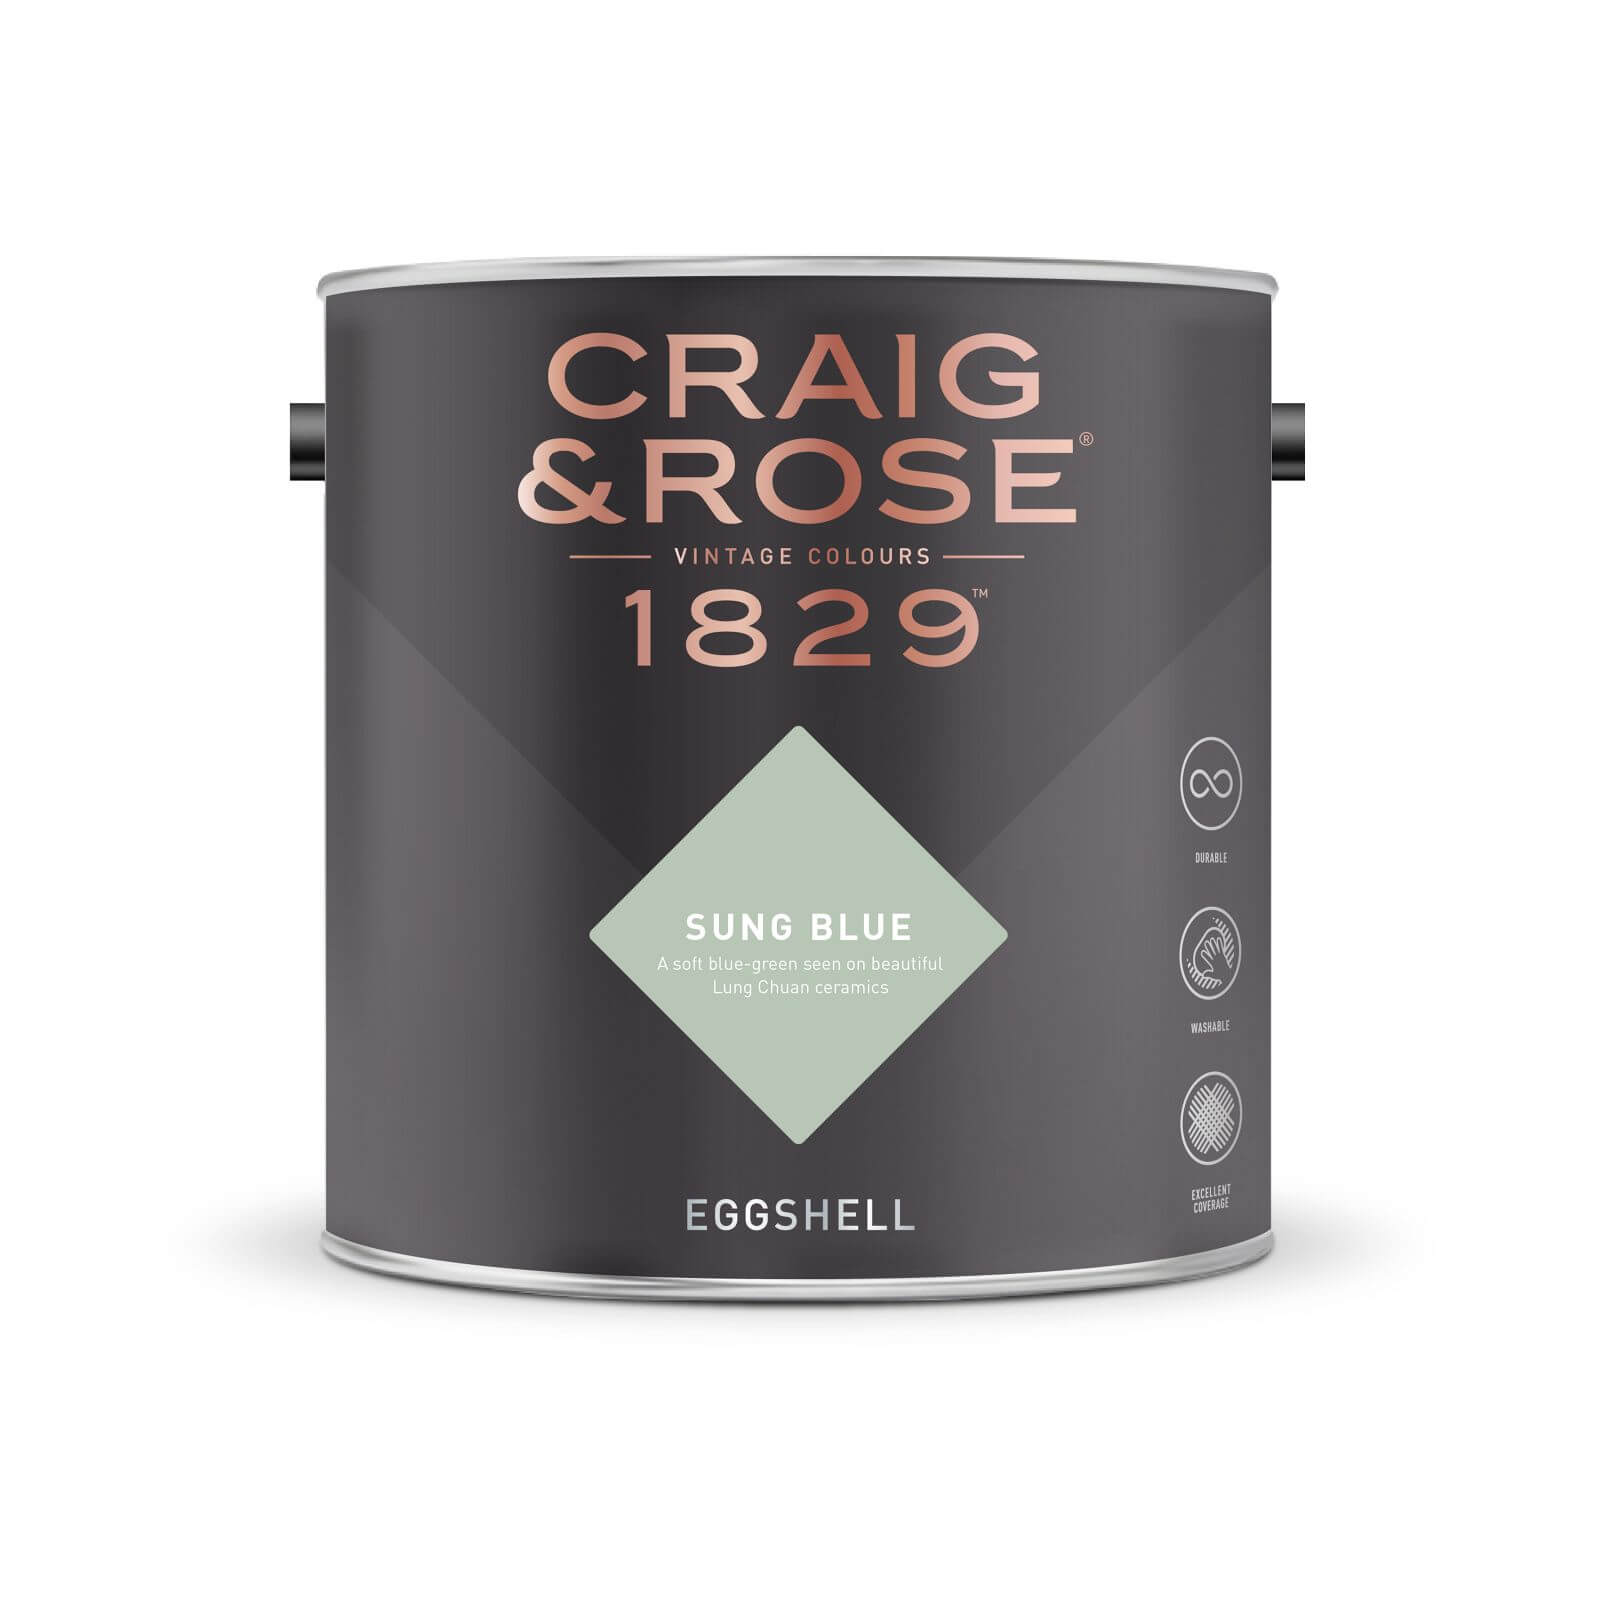 Craig & Rose 1829 Eggshell Paint Sung Blue - 2.5L